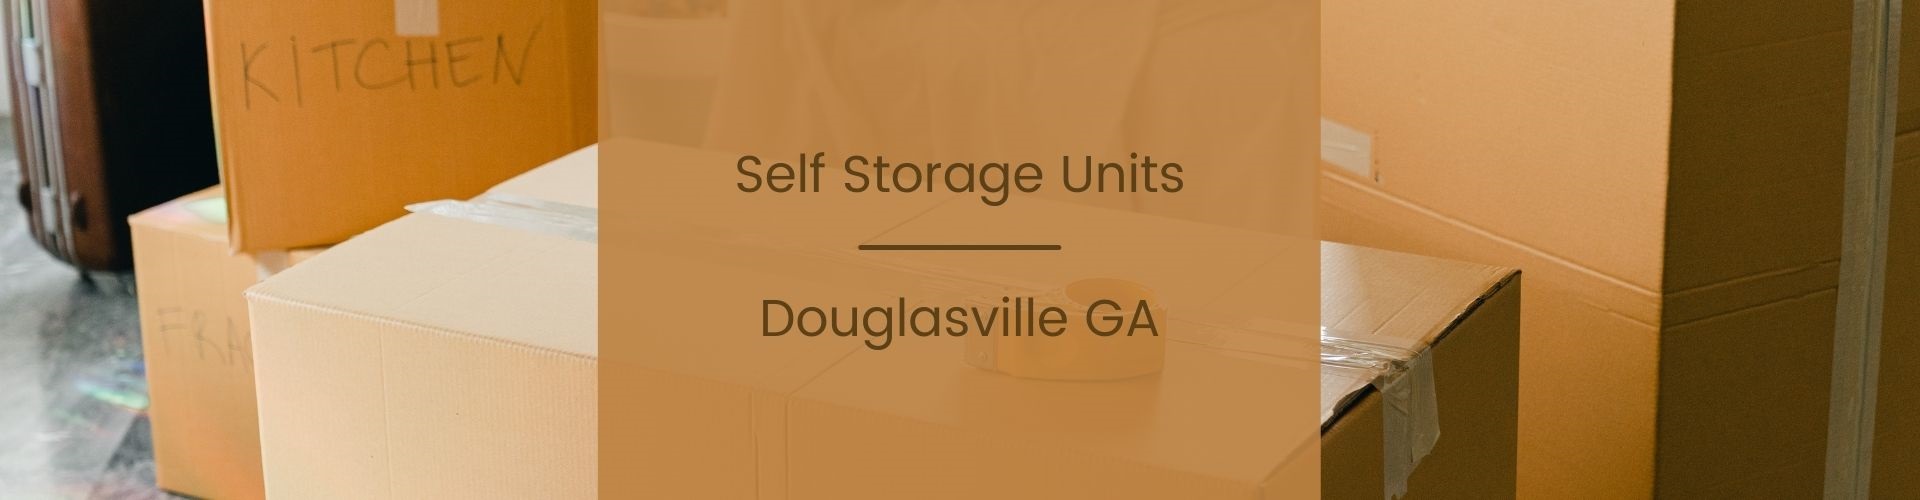 Self Storage Units Douglasville GA